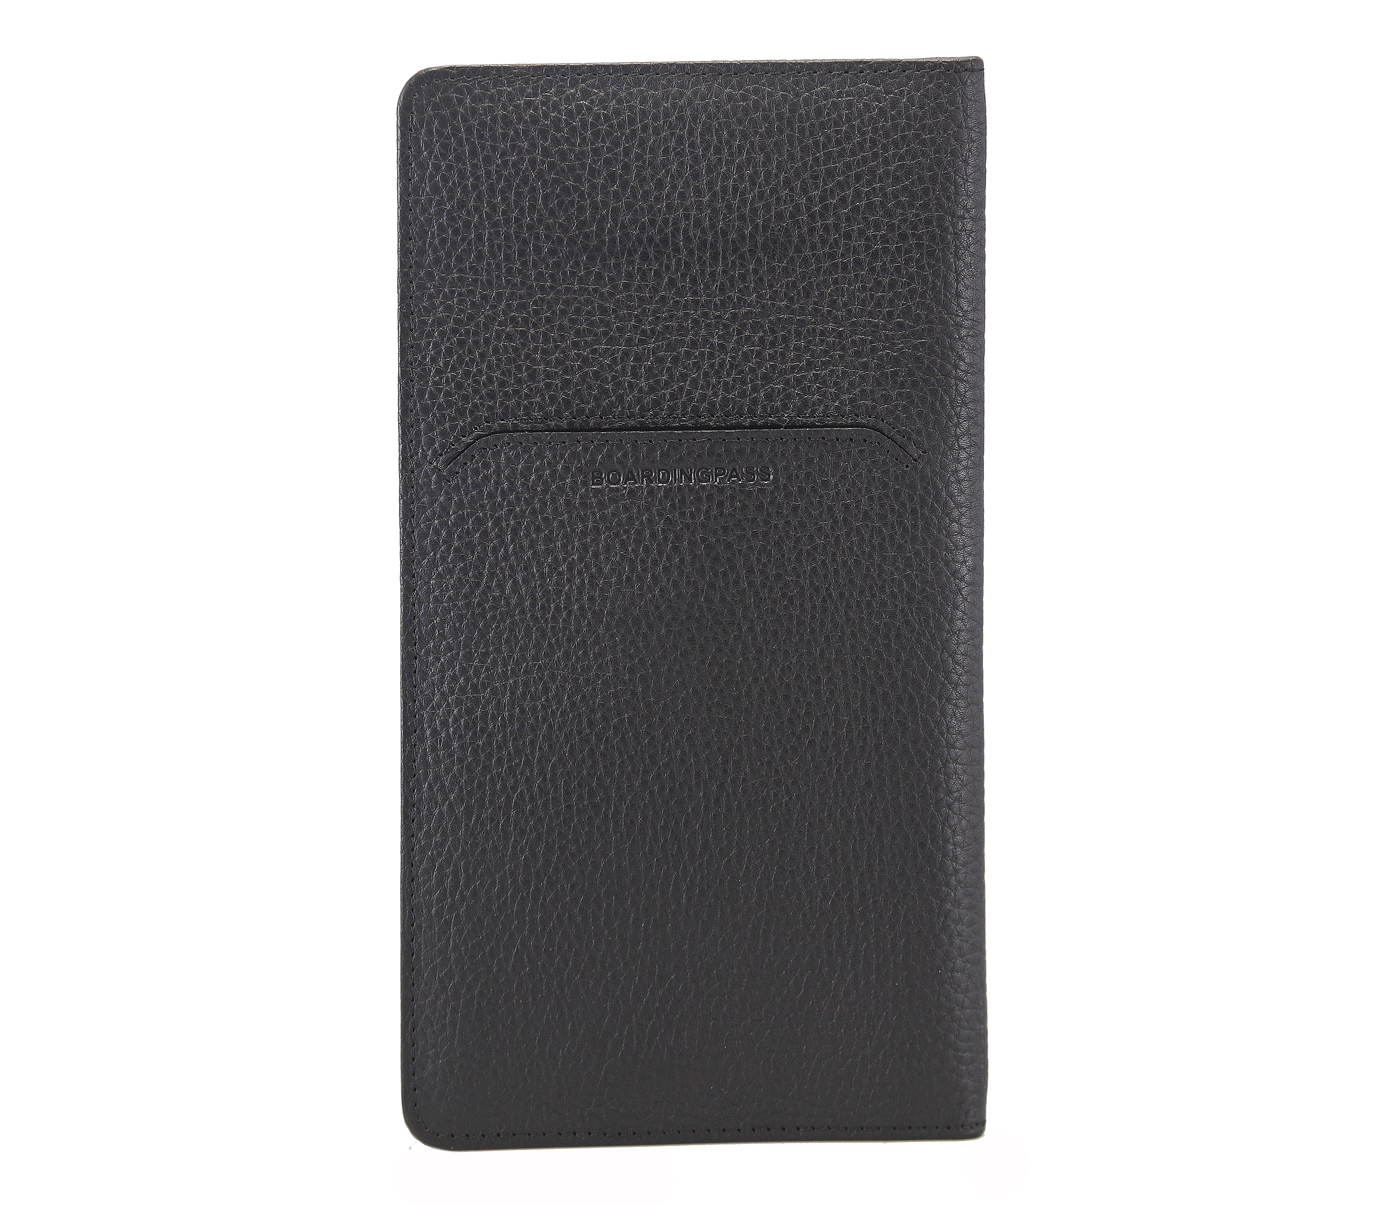 W85-Rafel-Travel document wallet in Genuine Leather - Black